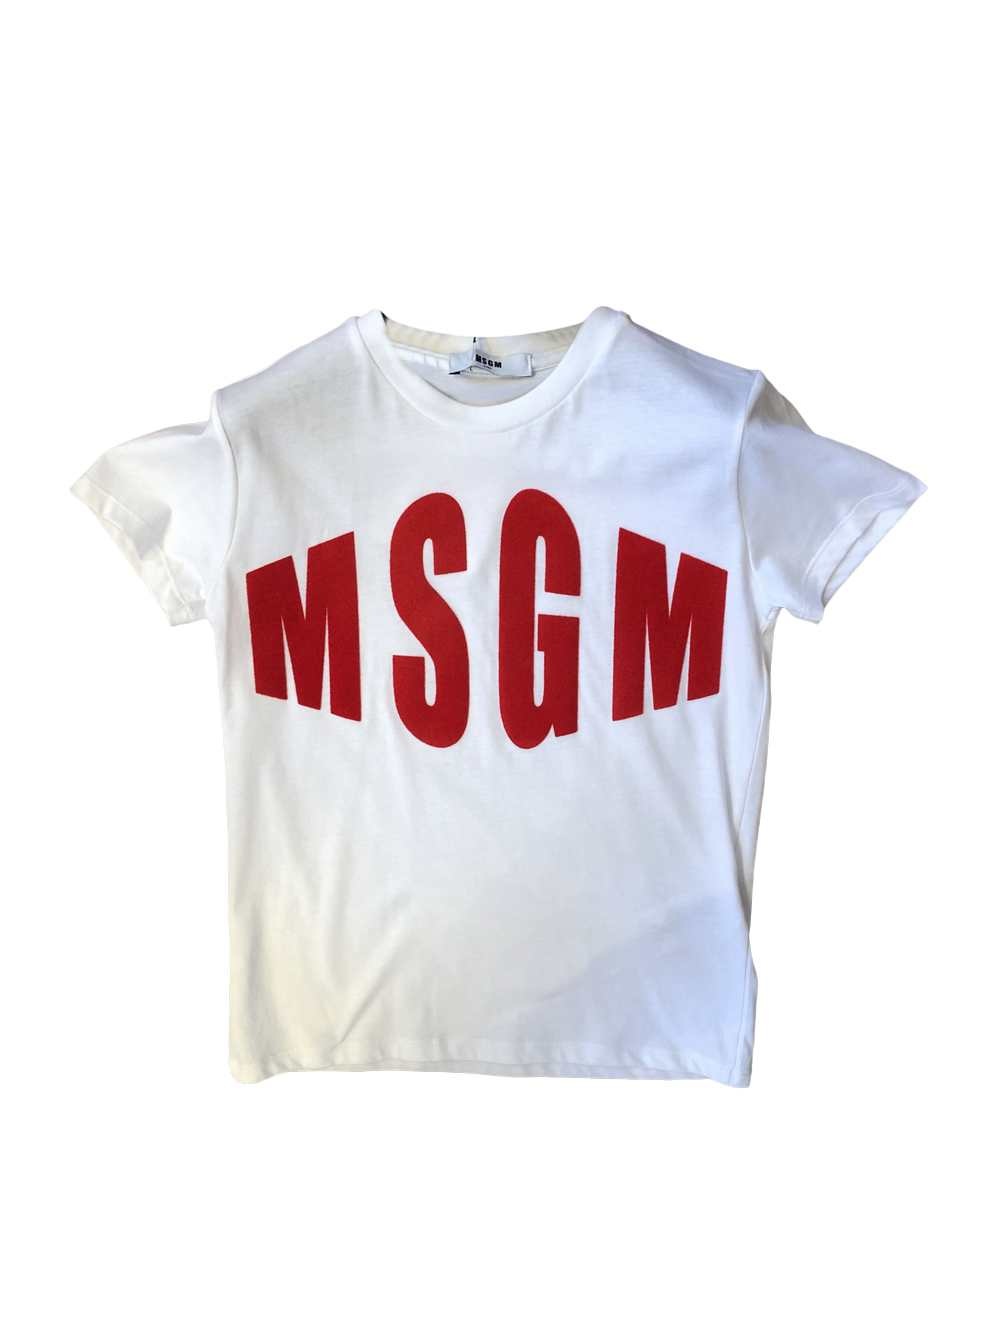 MSGM T-shirt rode letters km